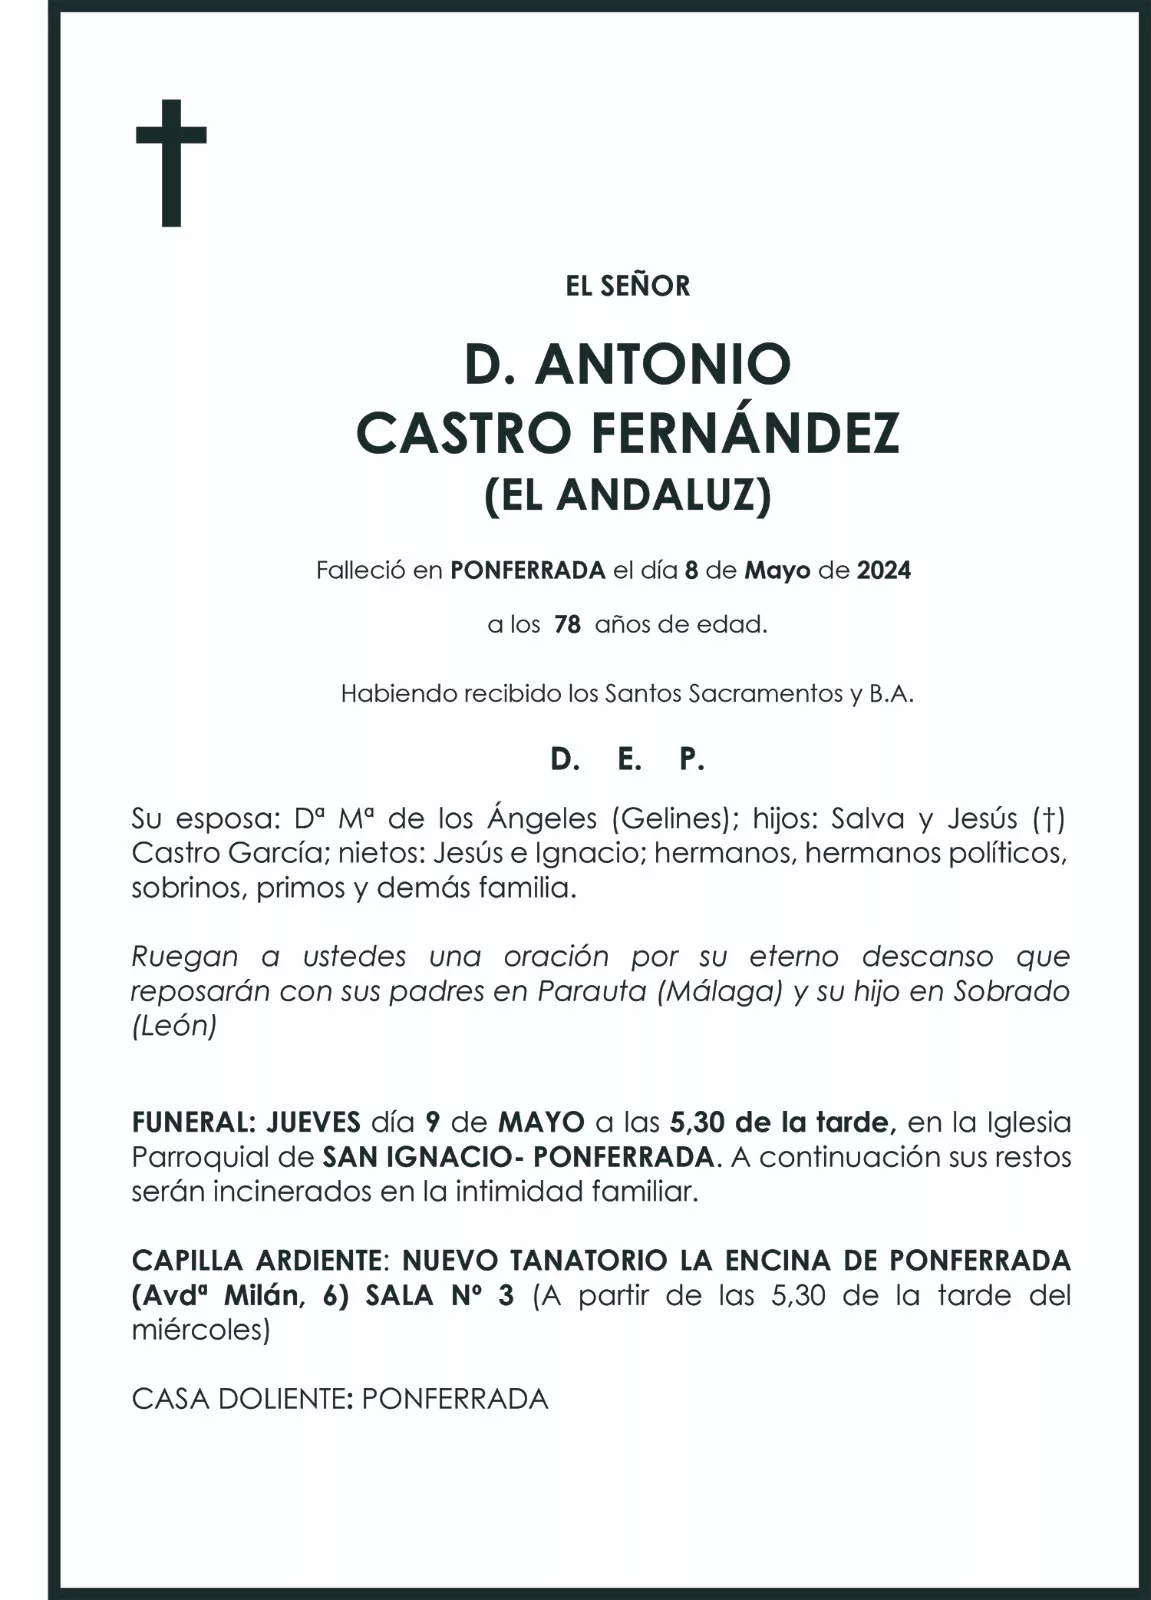 ANTONIO CASTRO FERNANDEZ